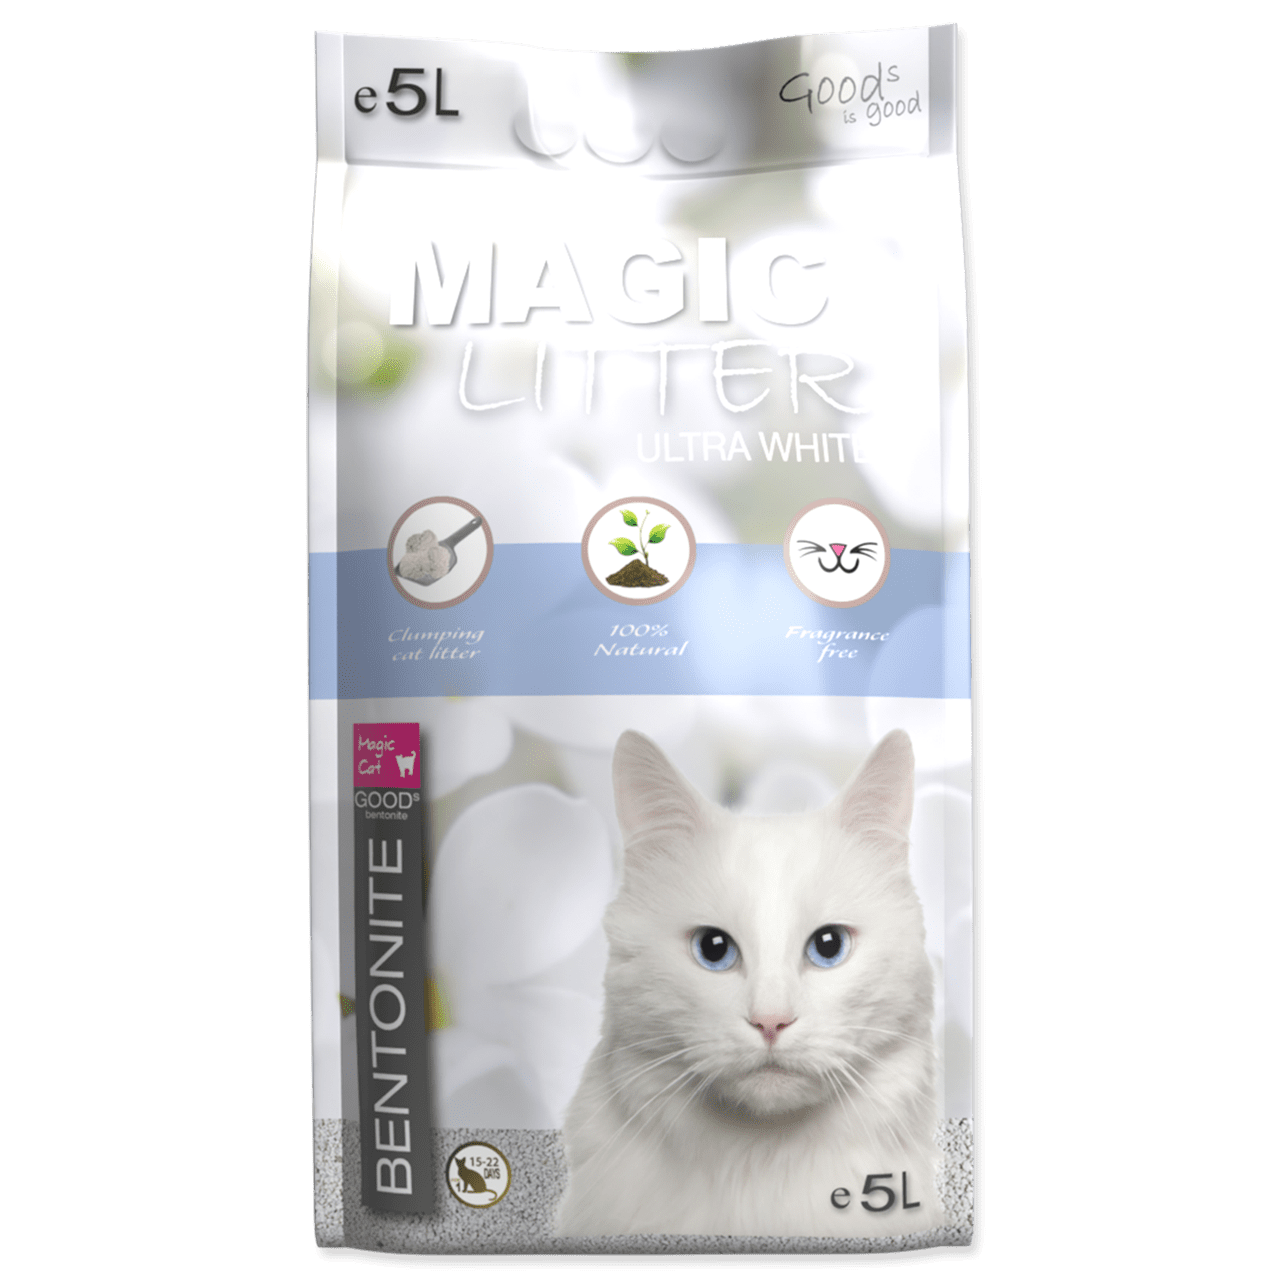 MAGIC CAT LITTER ULTRA WHITE